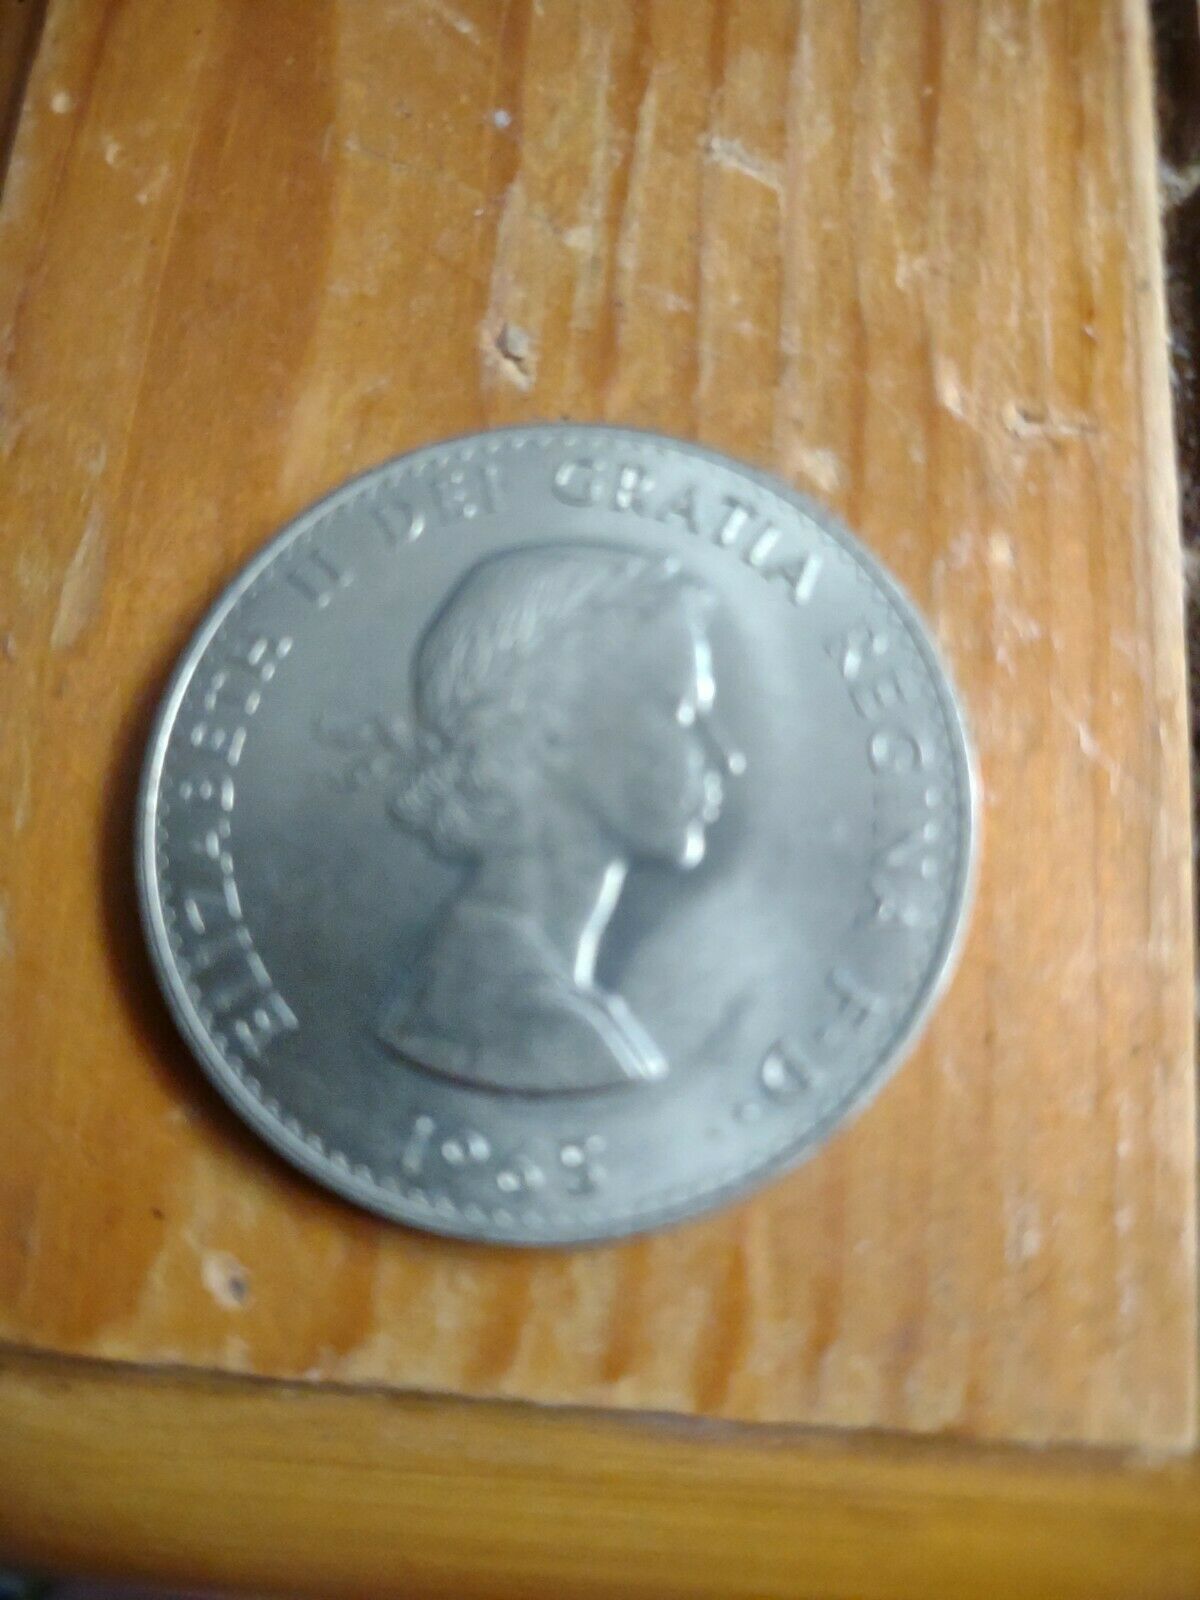 1965 Elizabeth Ii Dei Gratia Regina F.d. Churchill Coin!  Ww147xcx